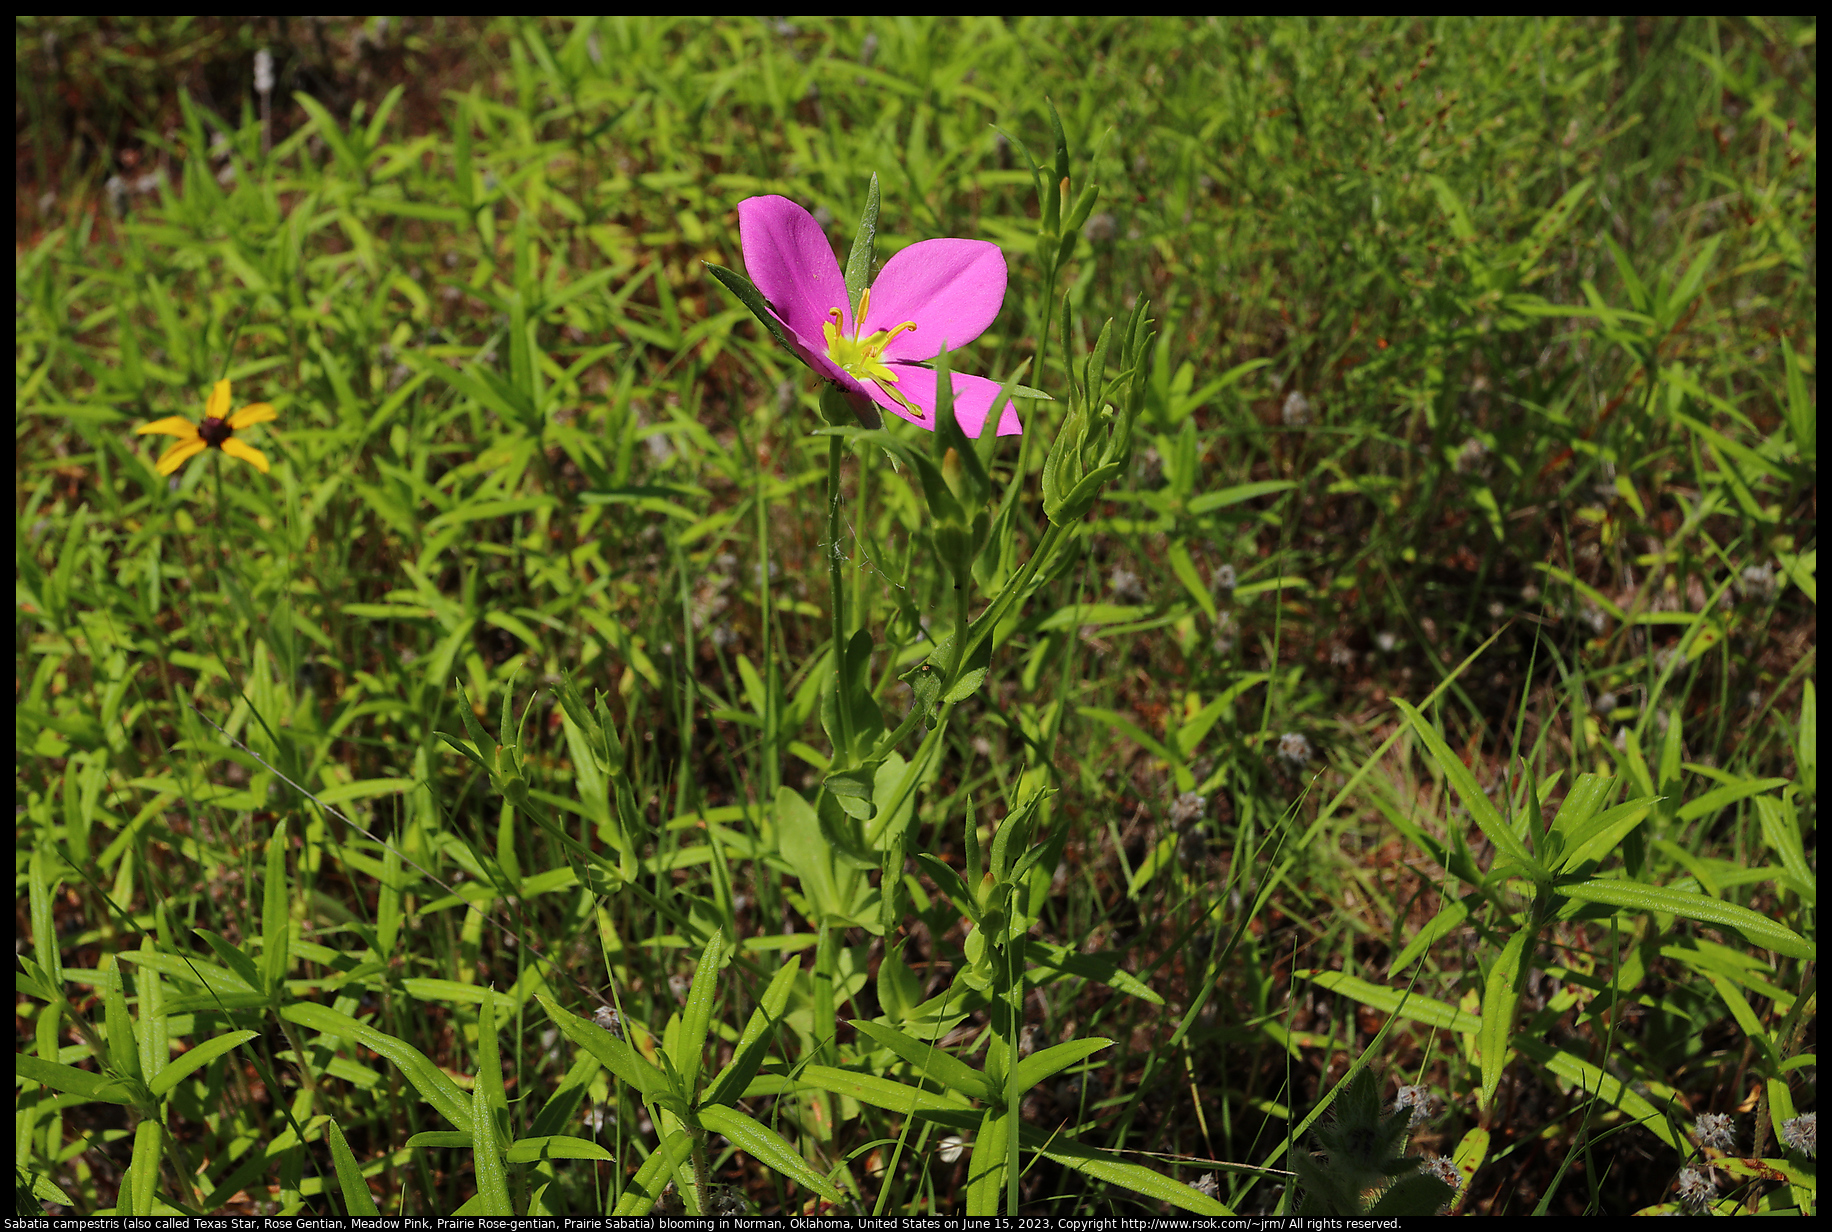 Sabatia campestris (also called Texas Star, Rose Gentian, Meadow Pink, Prairie Rose-gentian, Prairie Sabatia) blooming in Norman, Oklahoma, United States on June 15, 2023